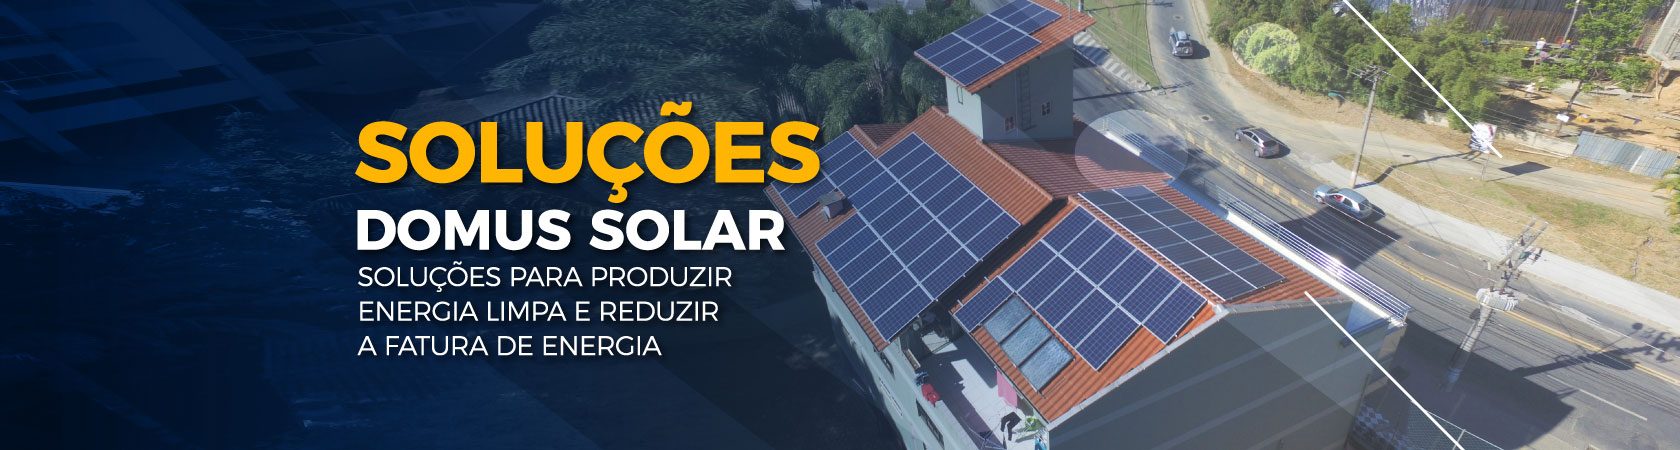 banner-solucoes-energia-solar-2